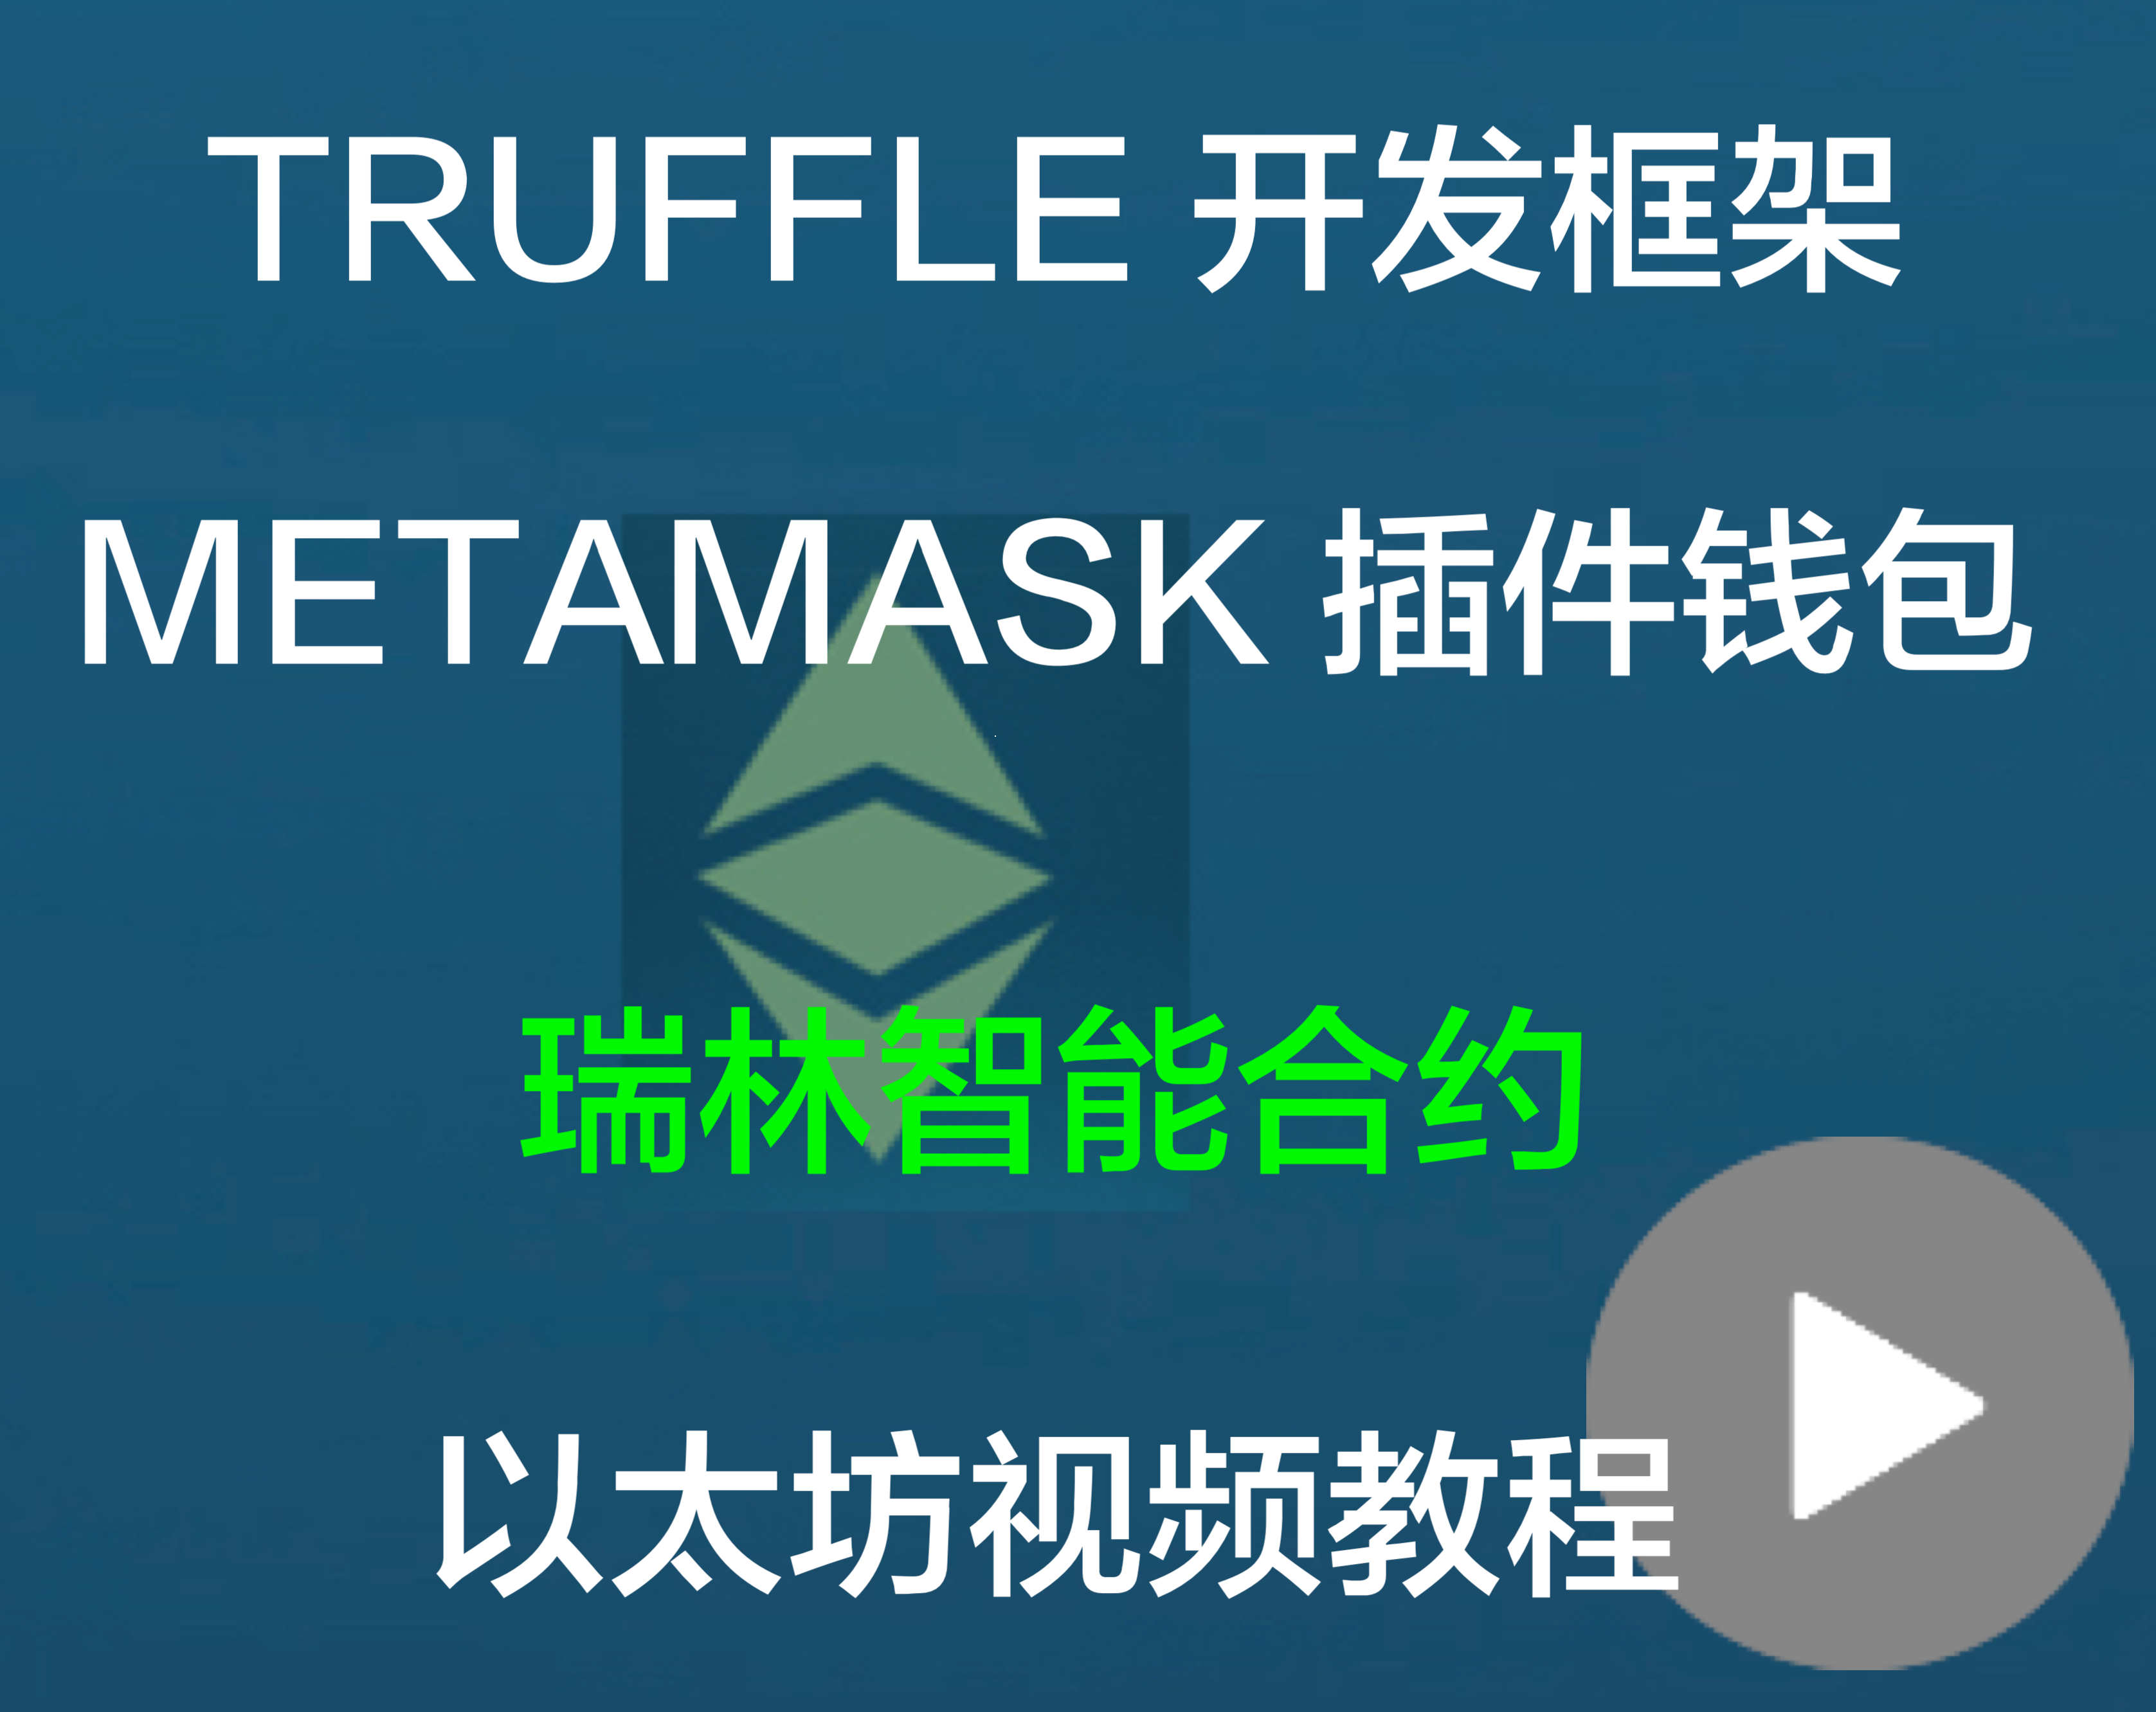  Truss development framework - METAMASK plug-in wallet